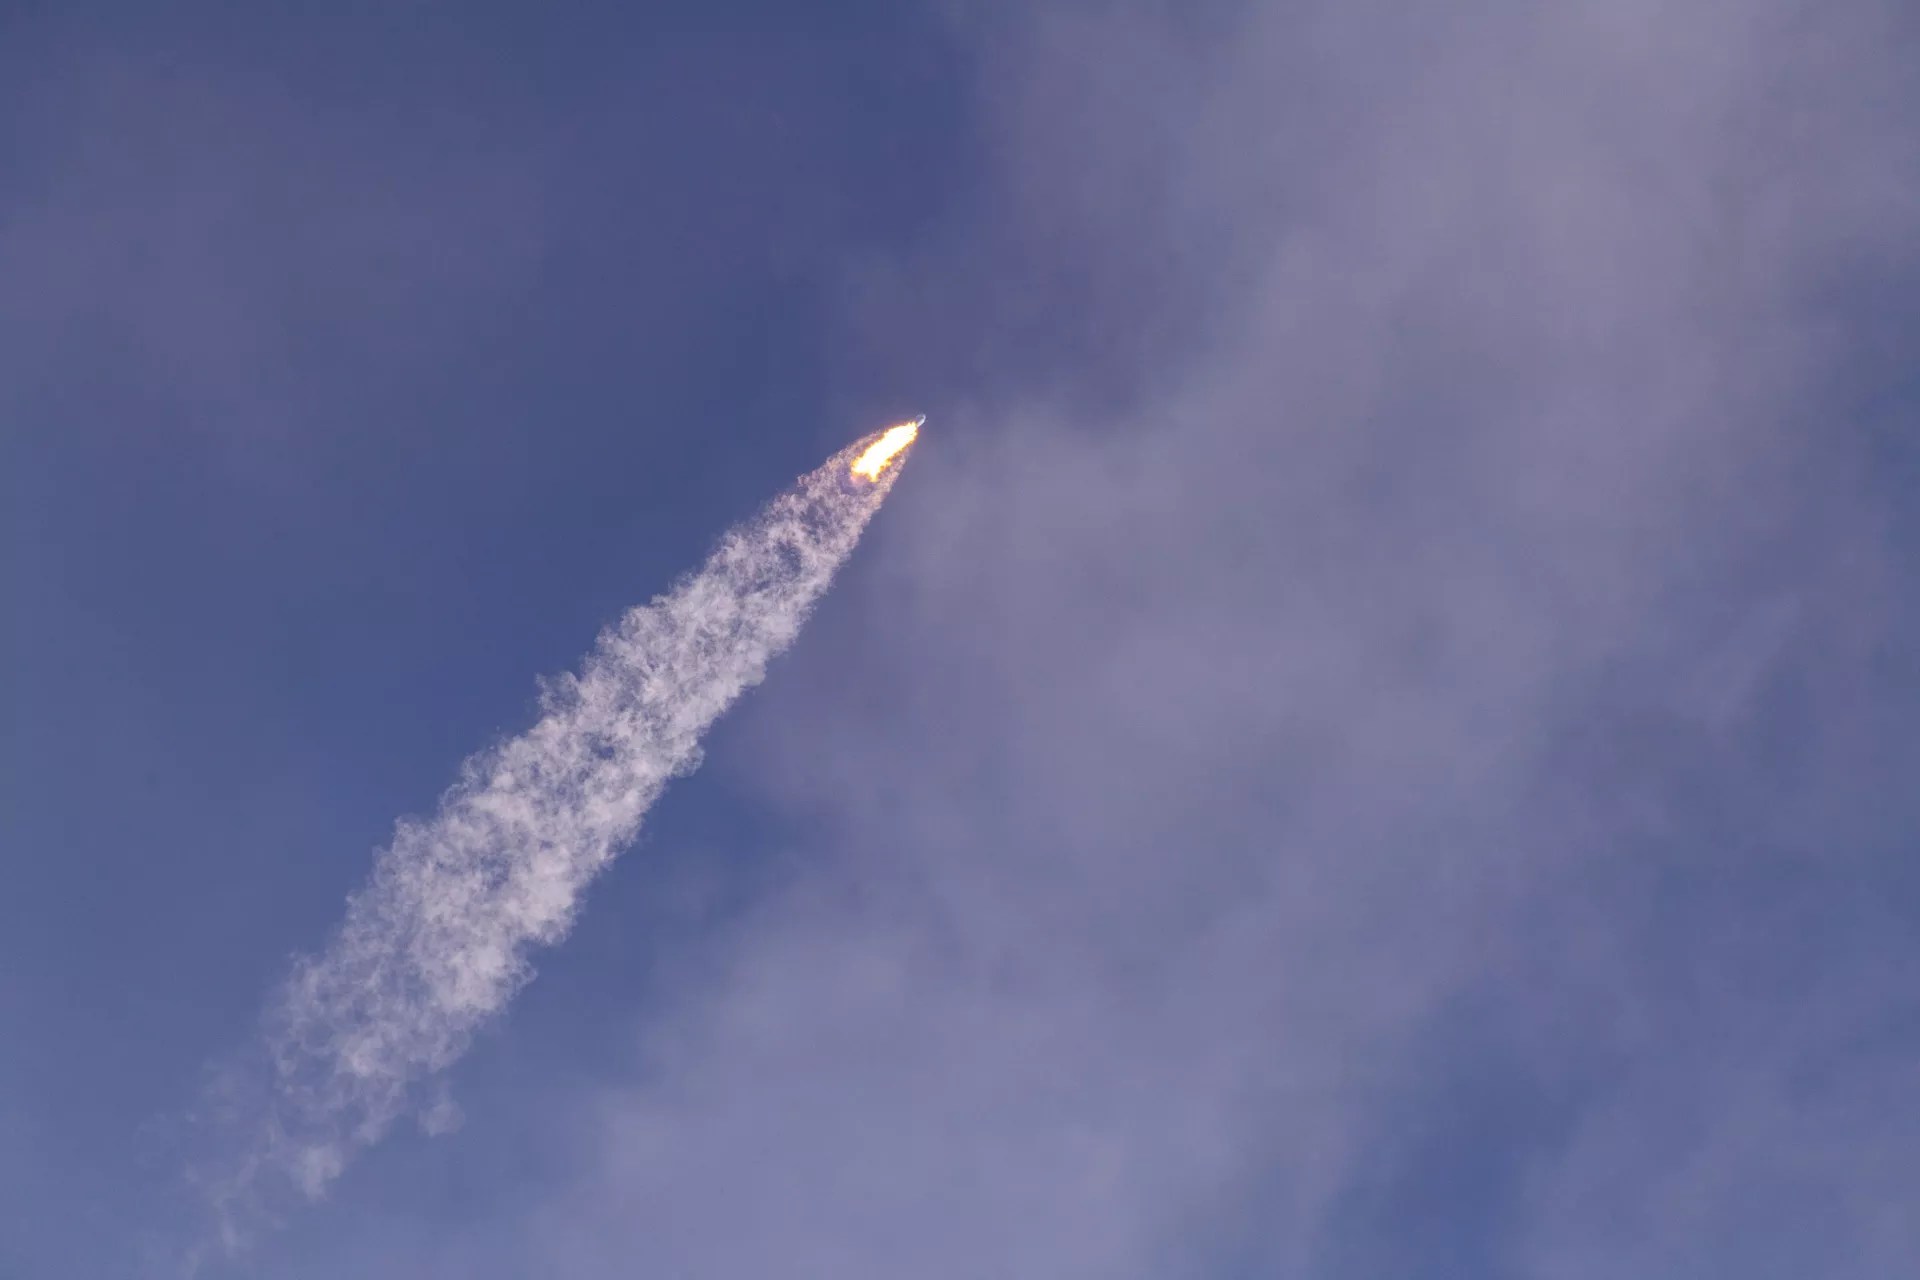 SpaceX показала фото со старта мощной ракеты Falcon Heavy